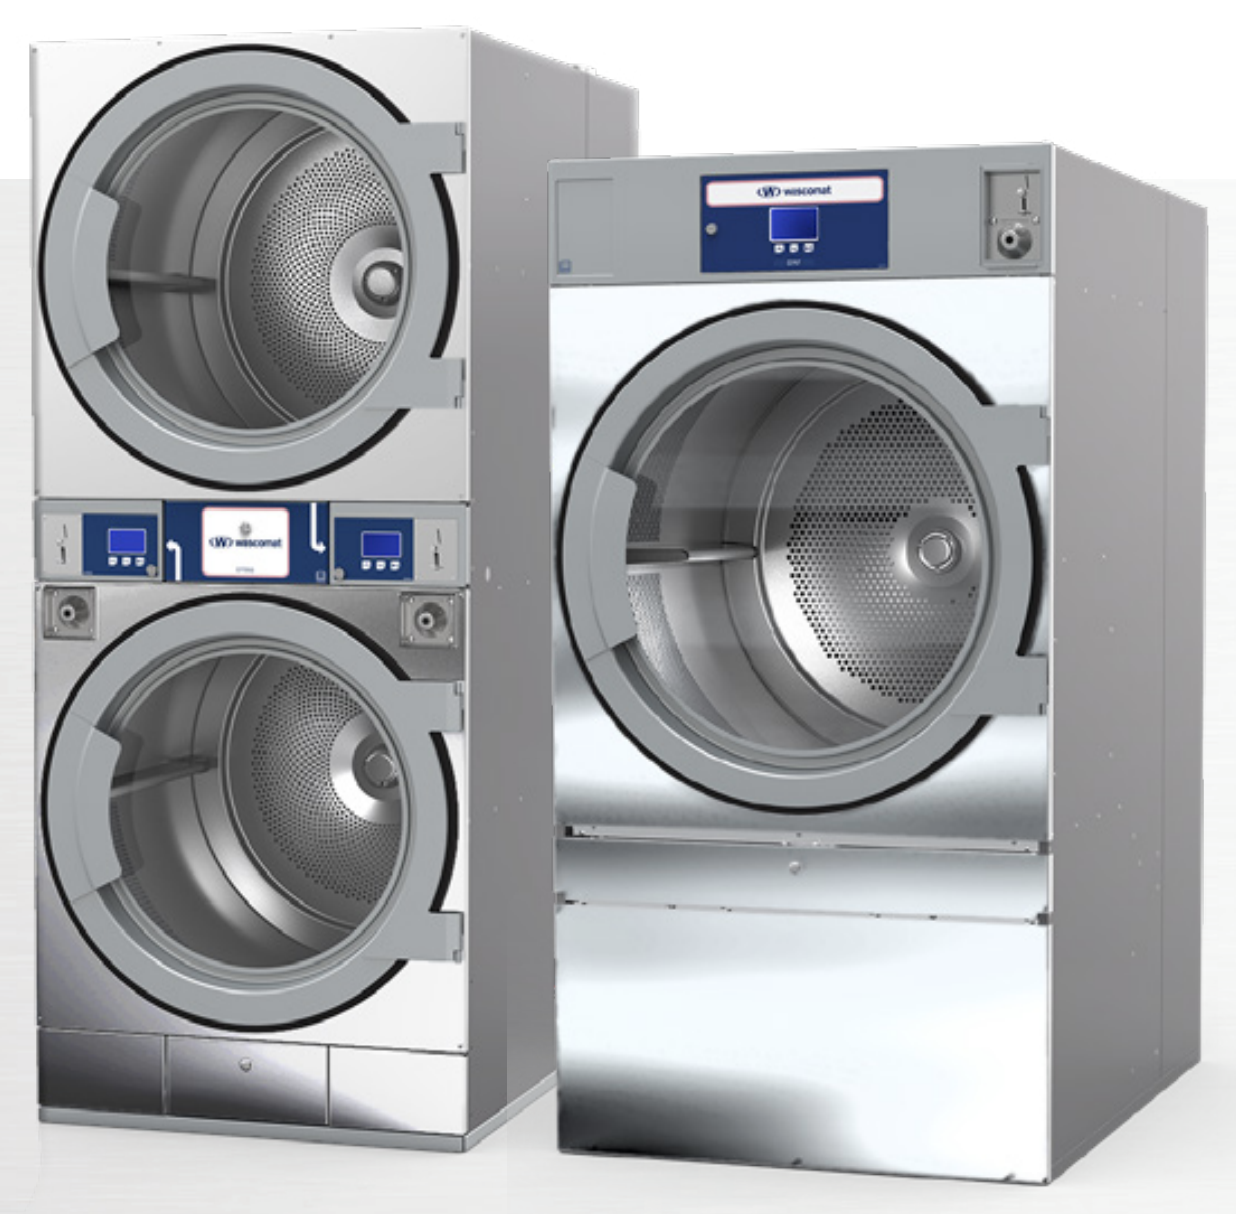 New 2022 Wascomat D735 - Automatic Laundry Service Of Va, Inc.